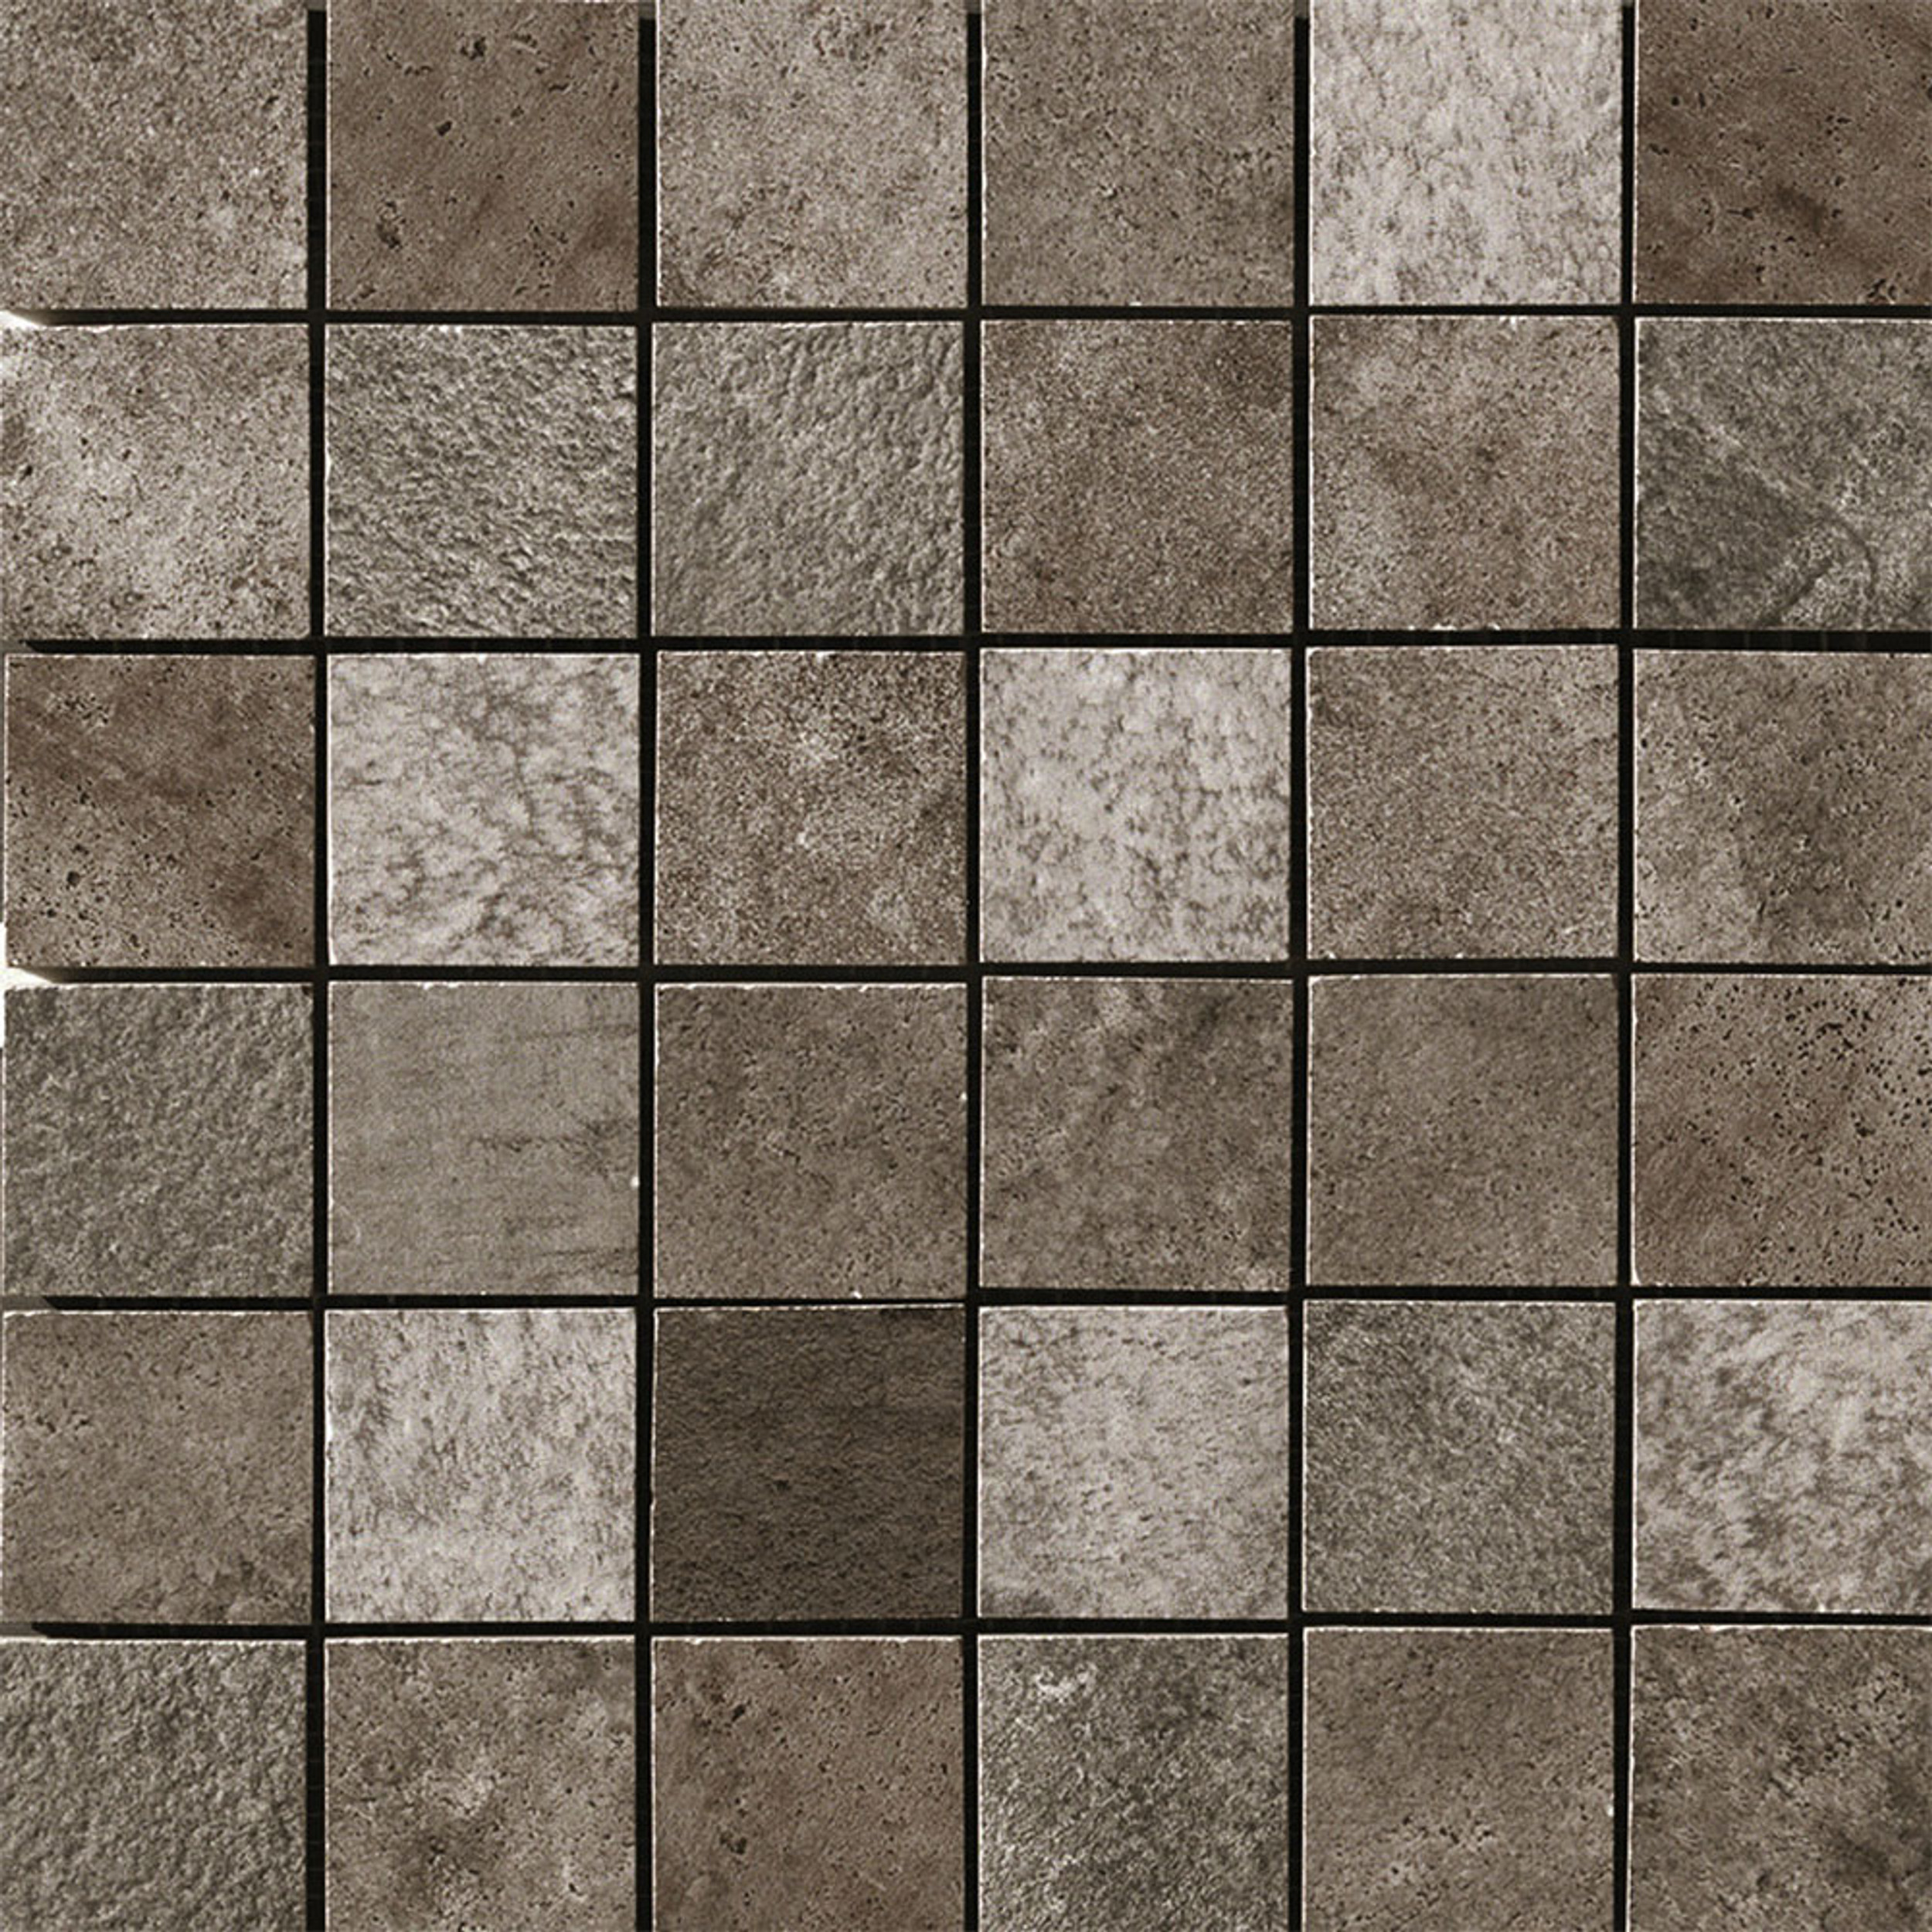 Queen Stone Corris 2x2 Square Mosaics on 12"x12" Mesh